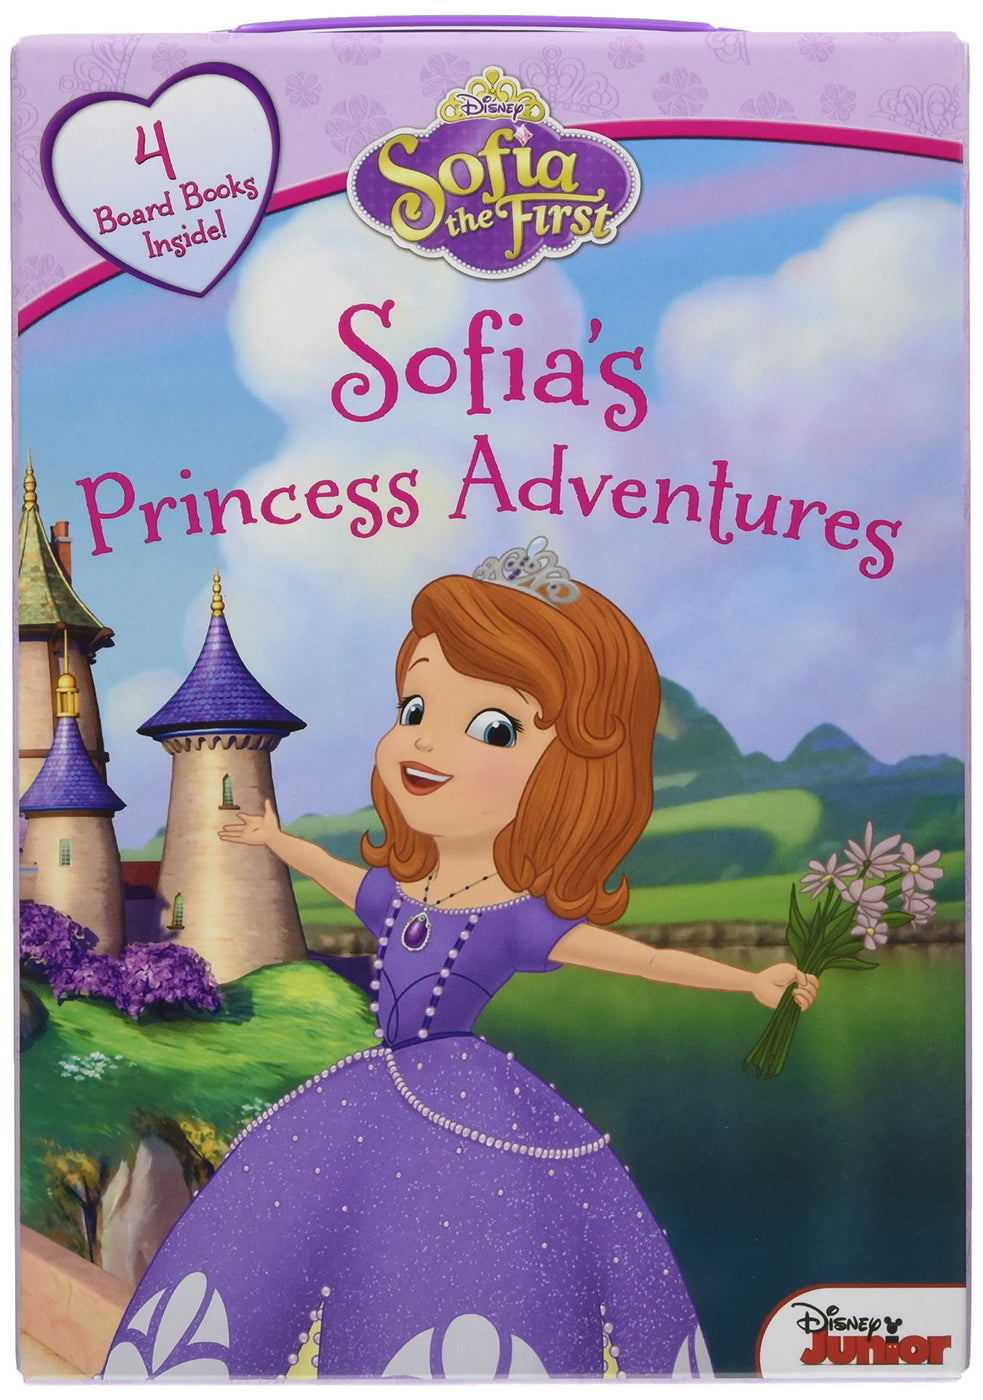 Sofia the First Sofia's Princess Adventures 4. Board Book Boxed Set ...